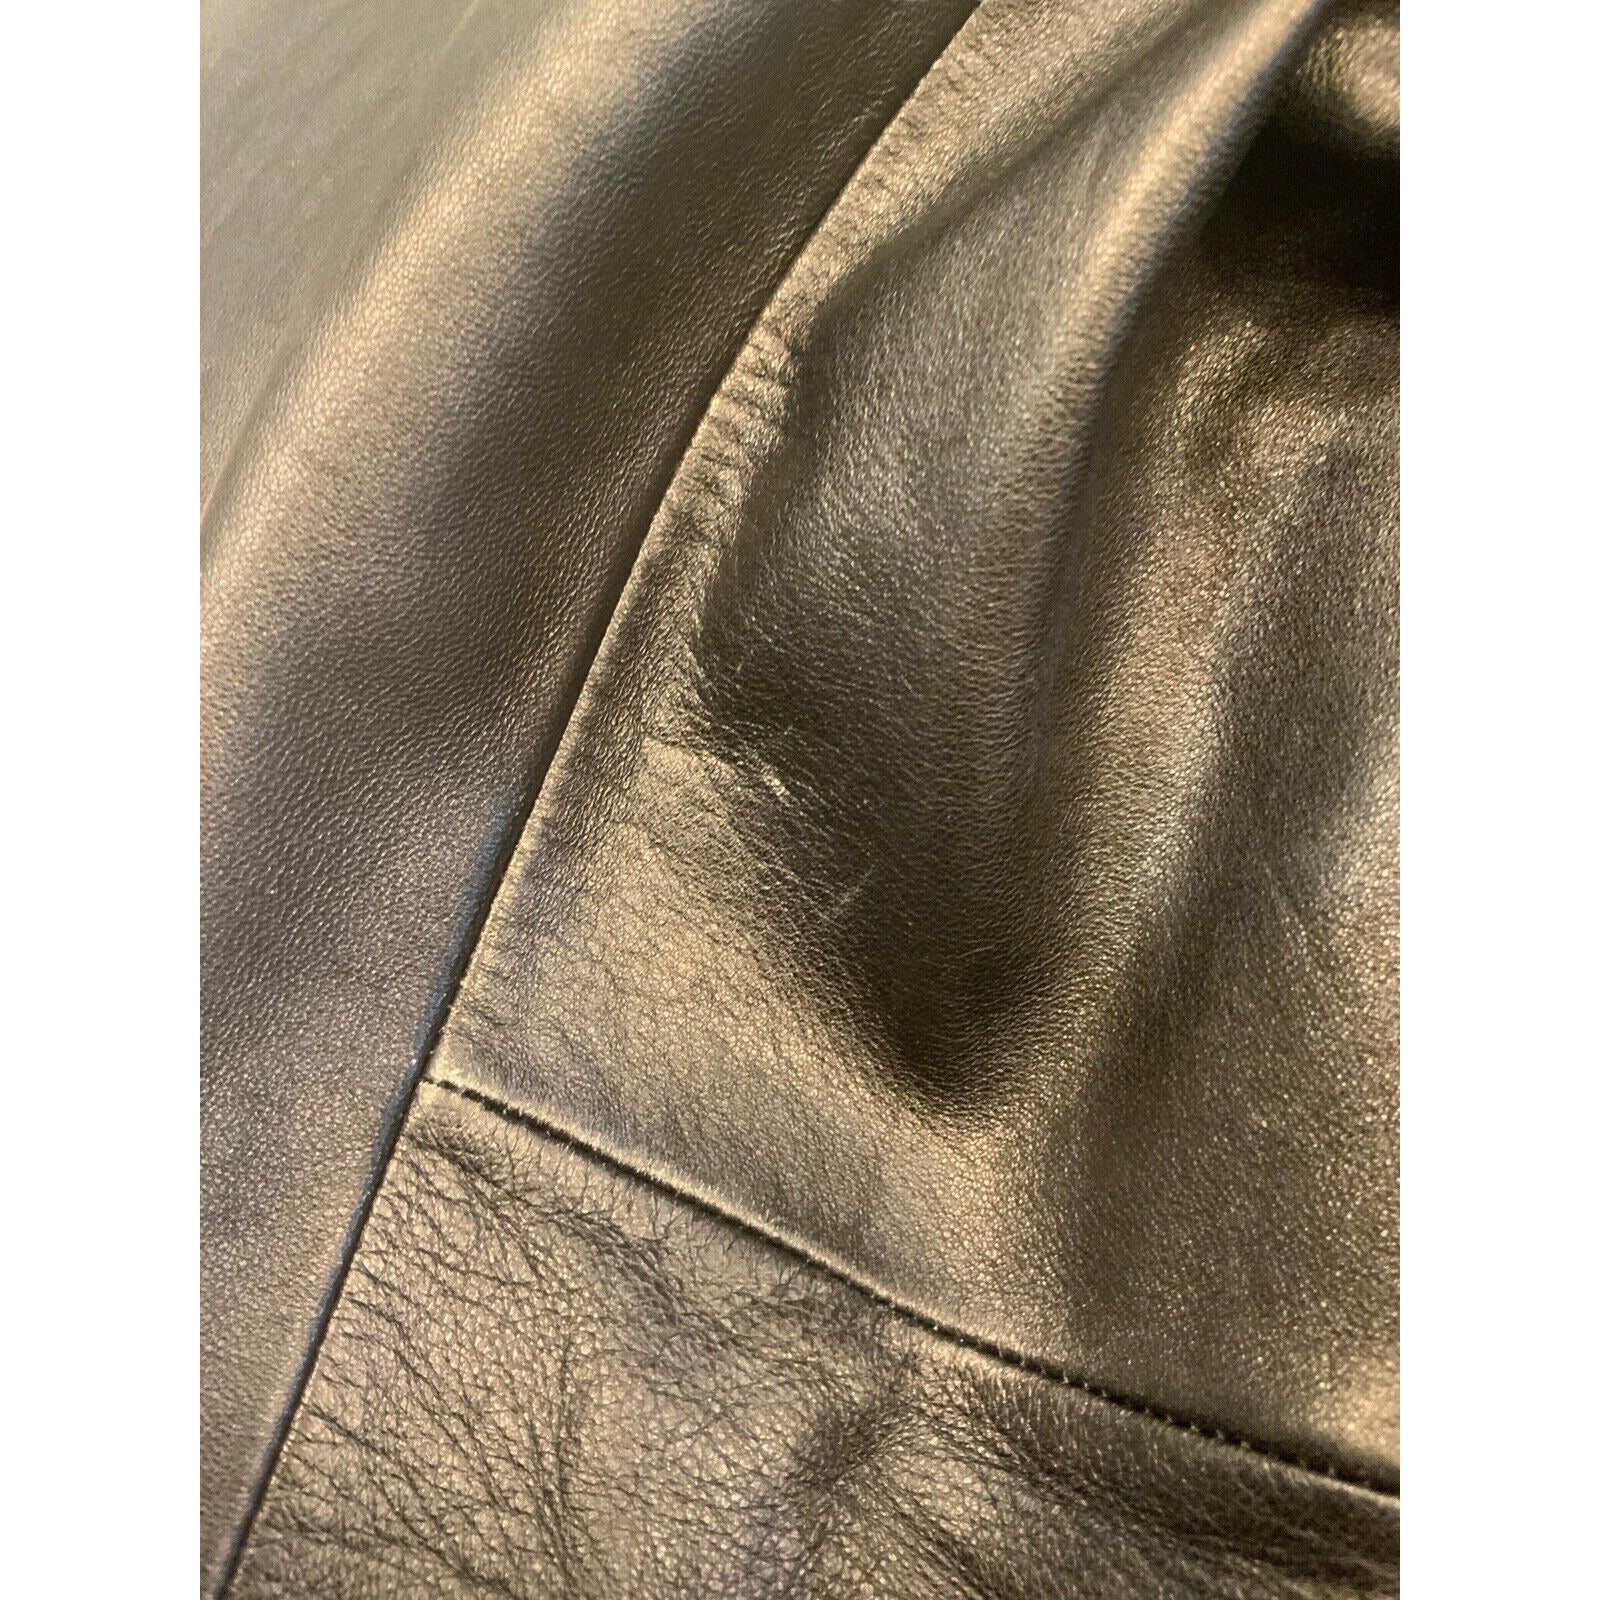 Closeup Of Small Scuff Mark On Jacket